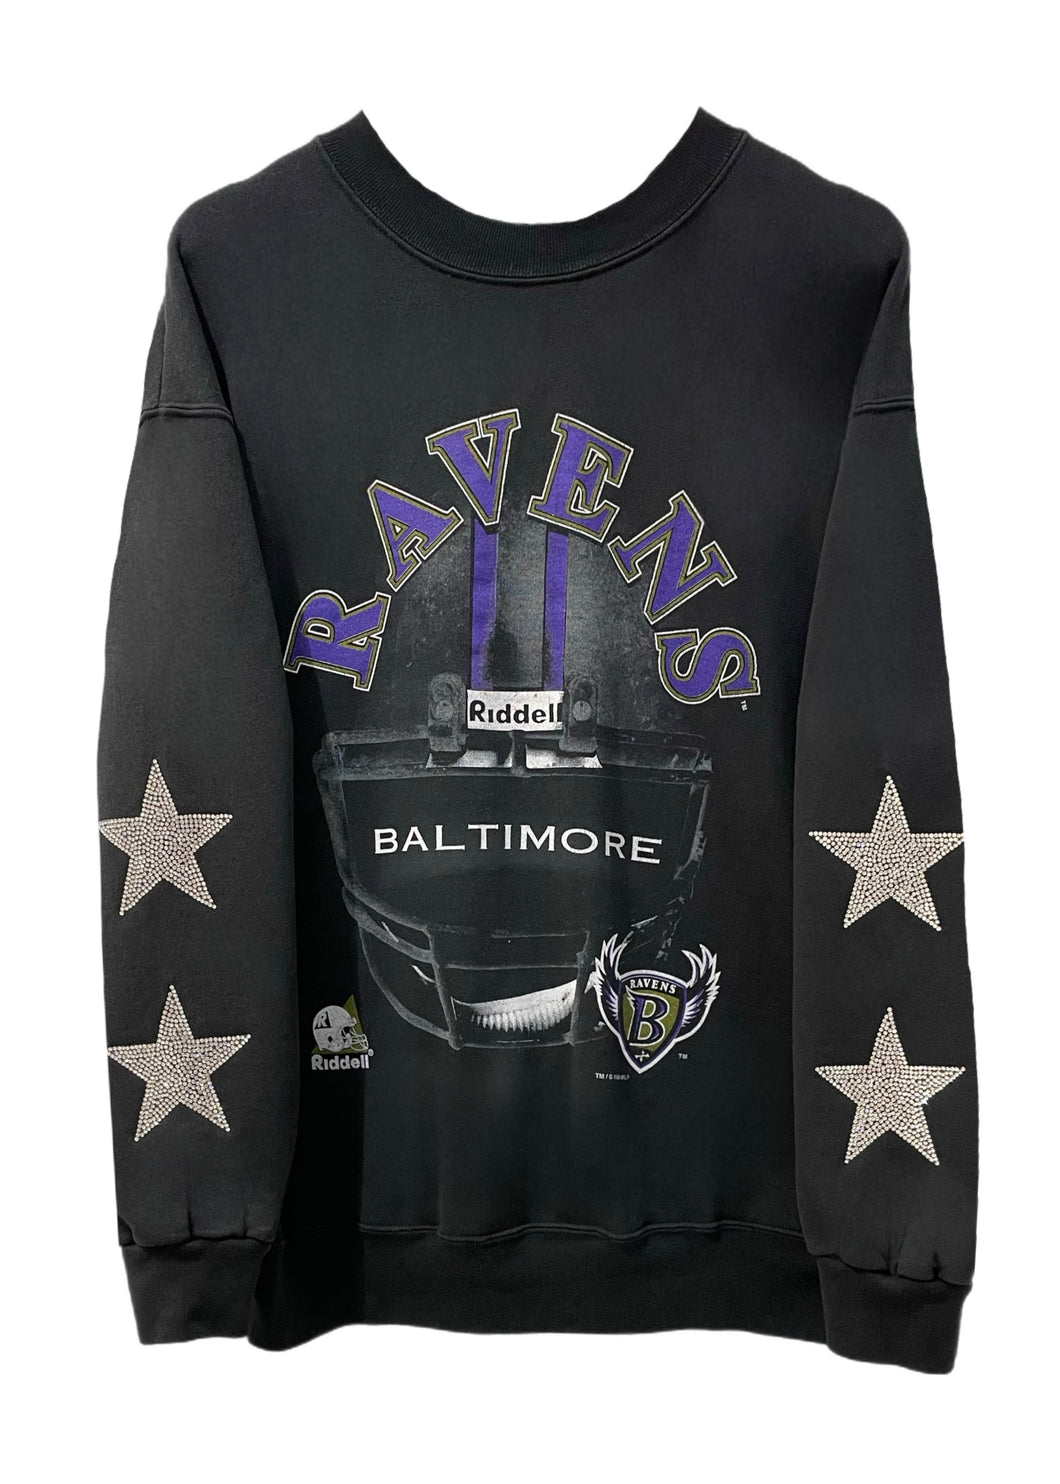 Baltimore Ravens, NFL One of a KIND Vintage Sweatshirt with Crystal Star Design